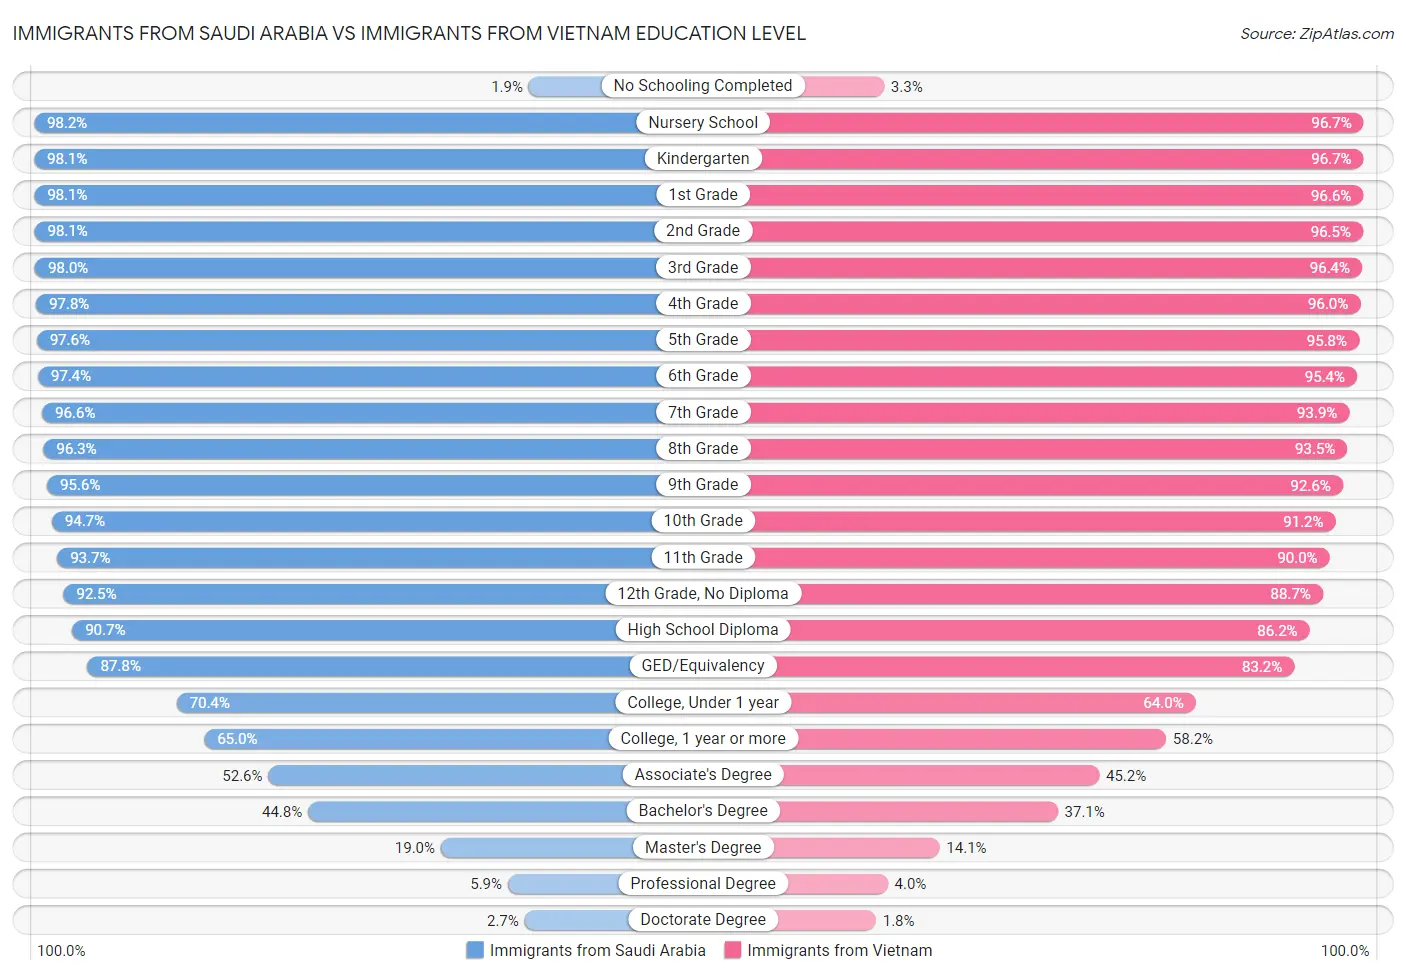 Immigrants from Saudi Arabia vs Immigrants from Vietnam Education Level